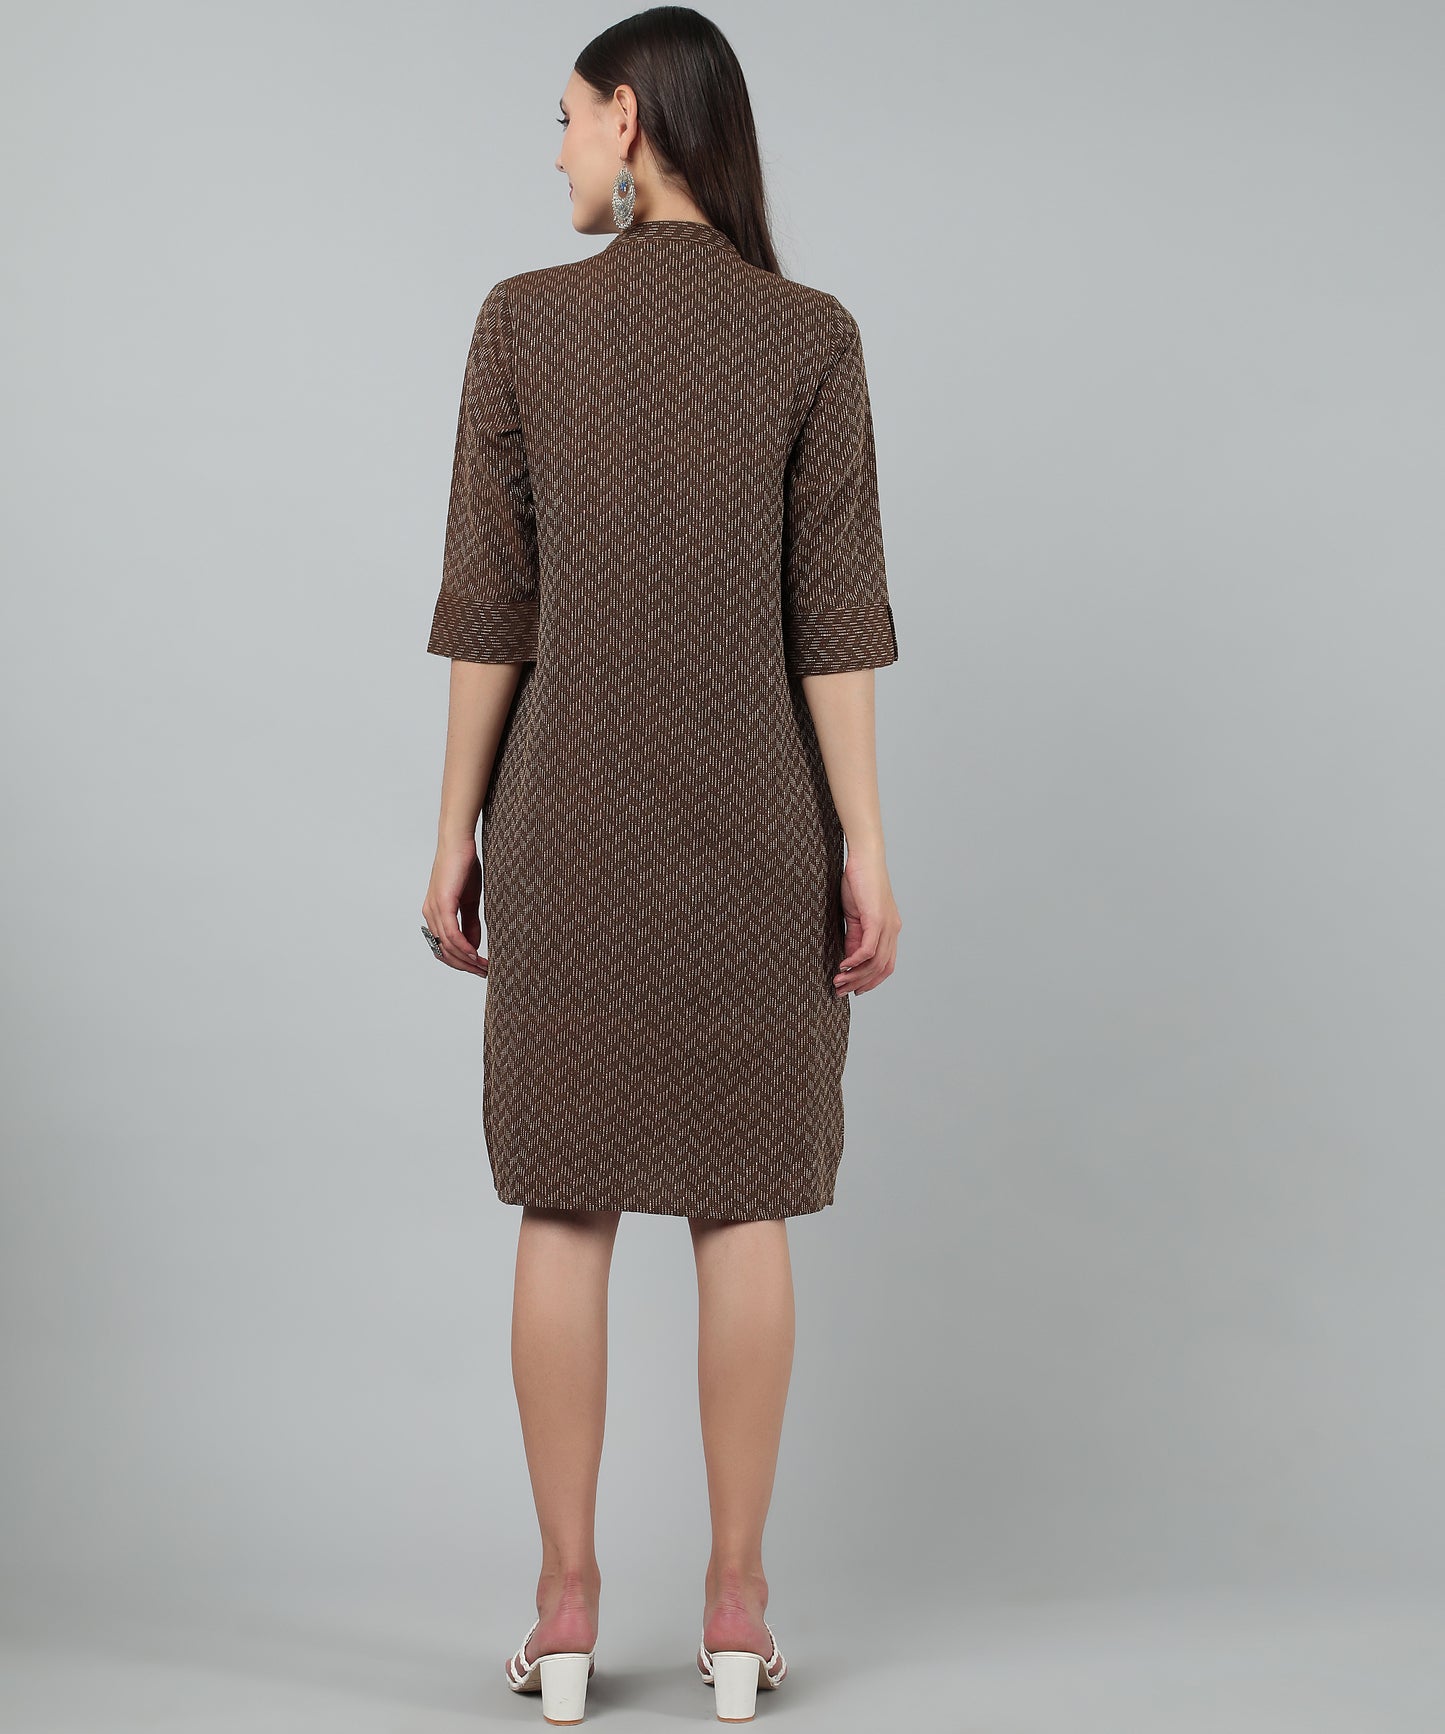 Self Weaved A-line Dress for Women Open Button Design, Brown